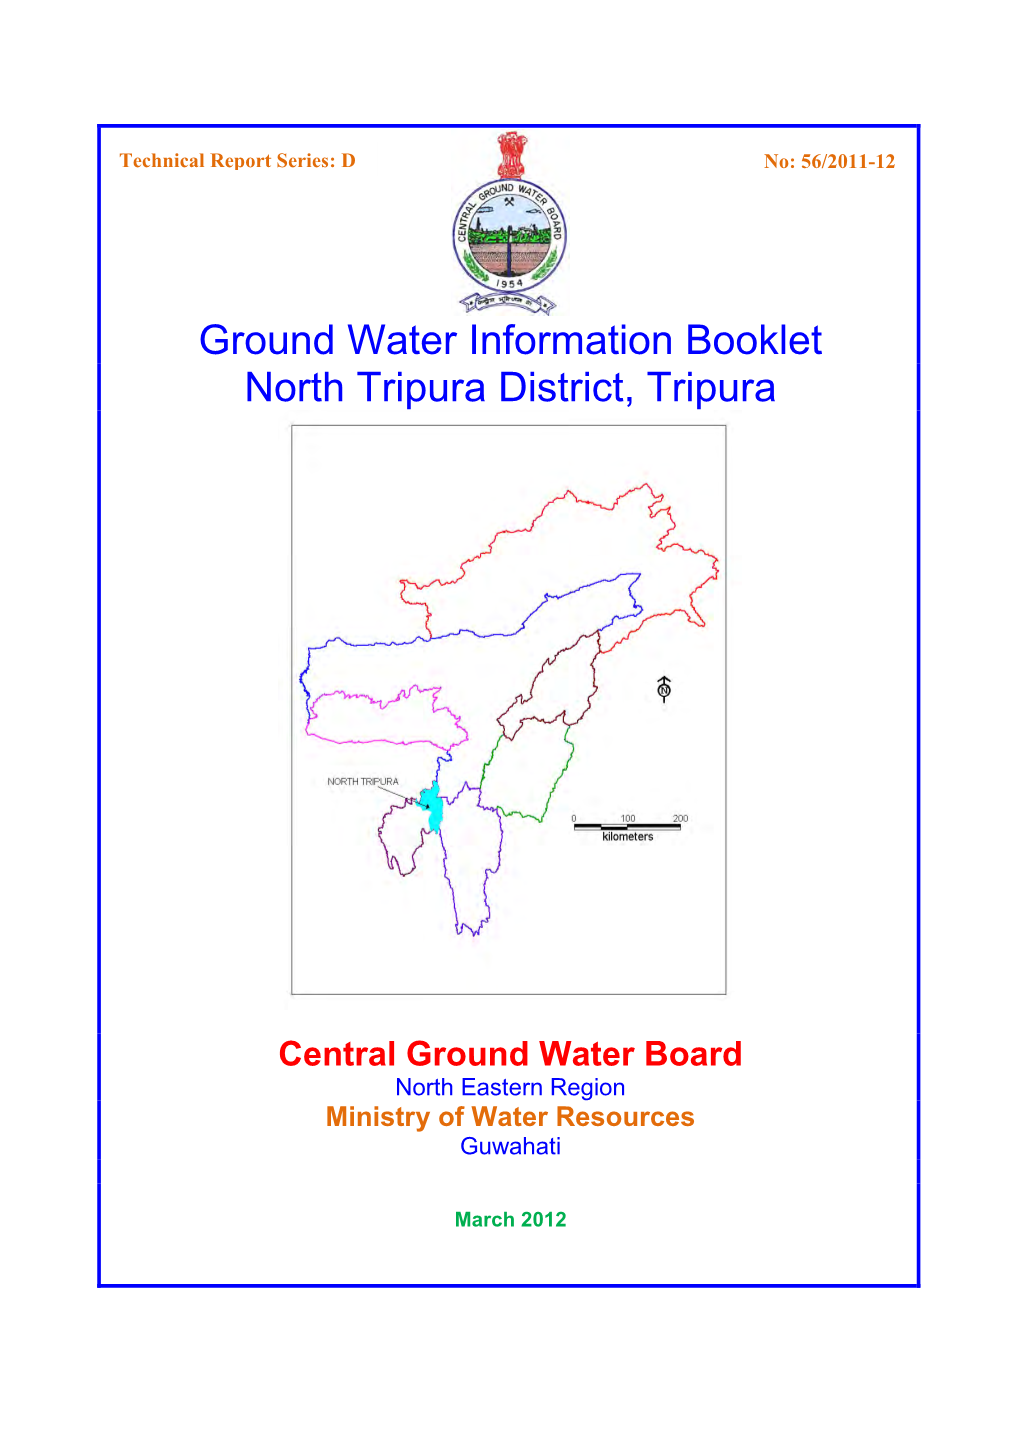 North Tripura District, Tripura